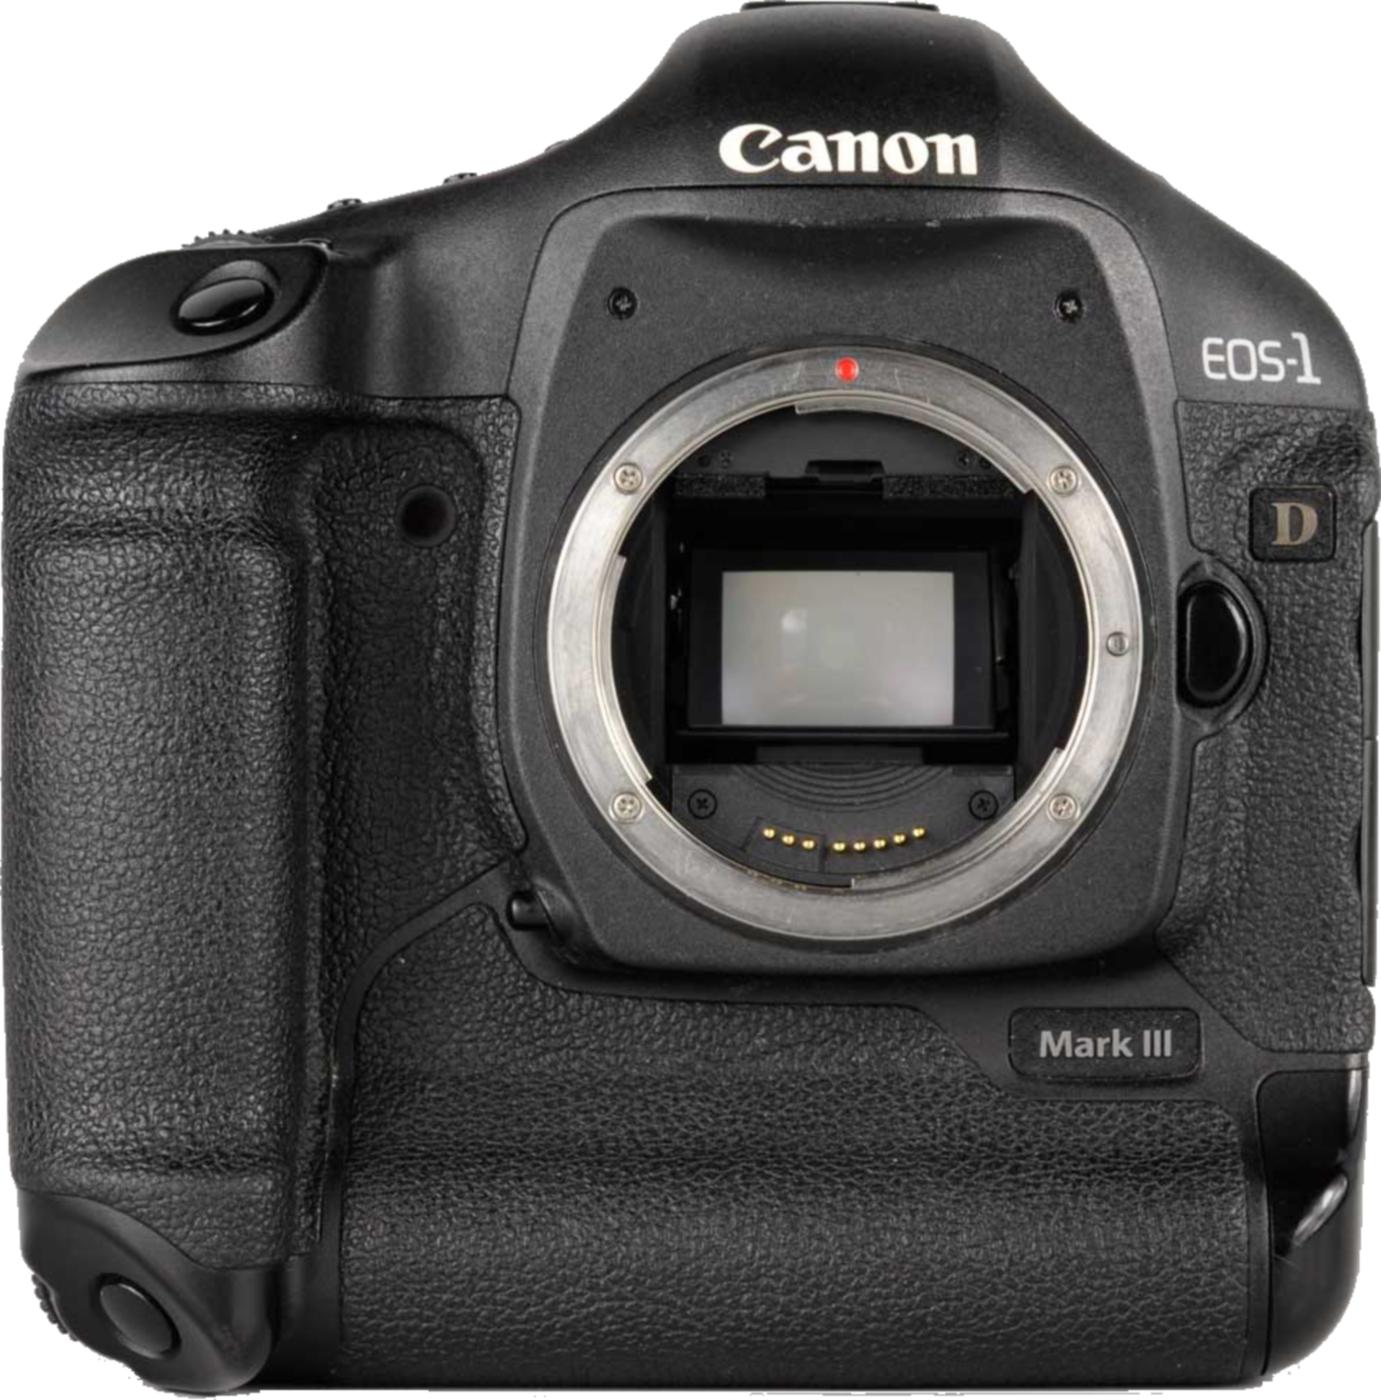 Canon 1ds mark. Canon EOS 1ds Mark lll. Canon 1d Mark III. EOS 1d Mark III. Canon EOS 1d Mark 3.